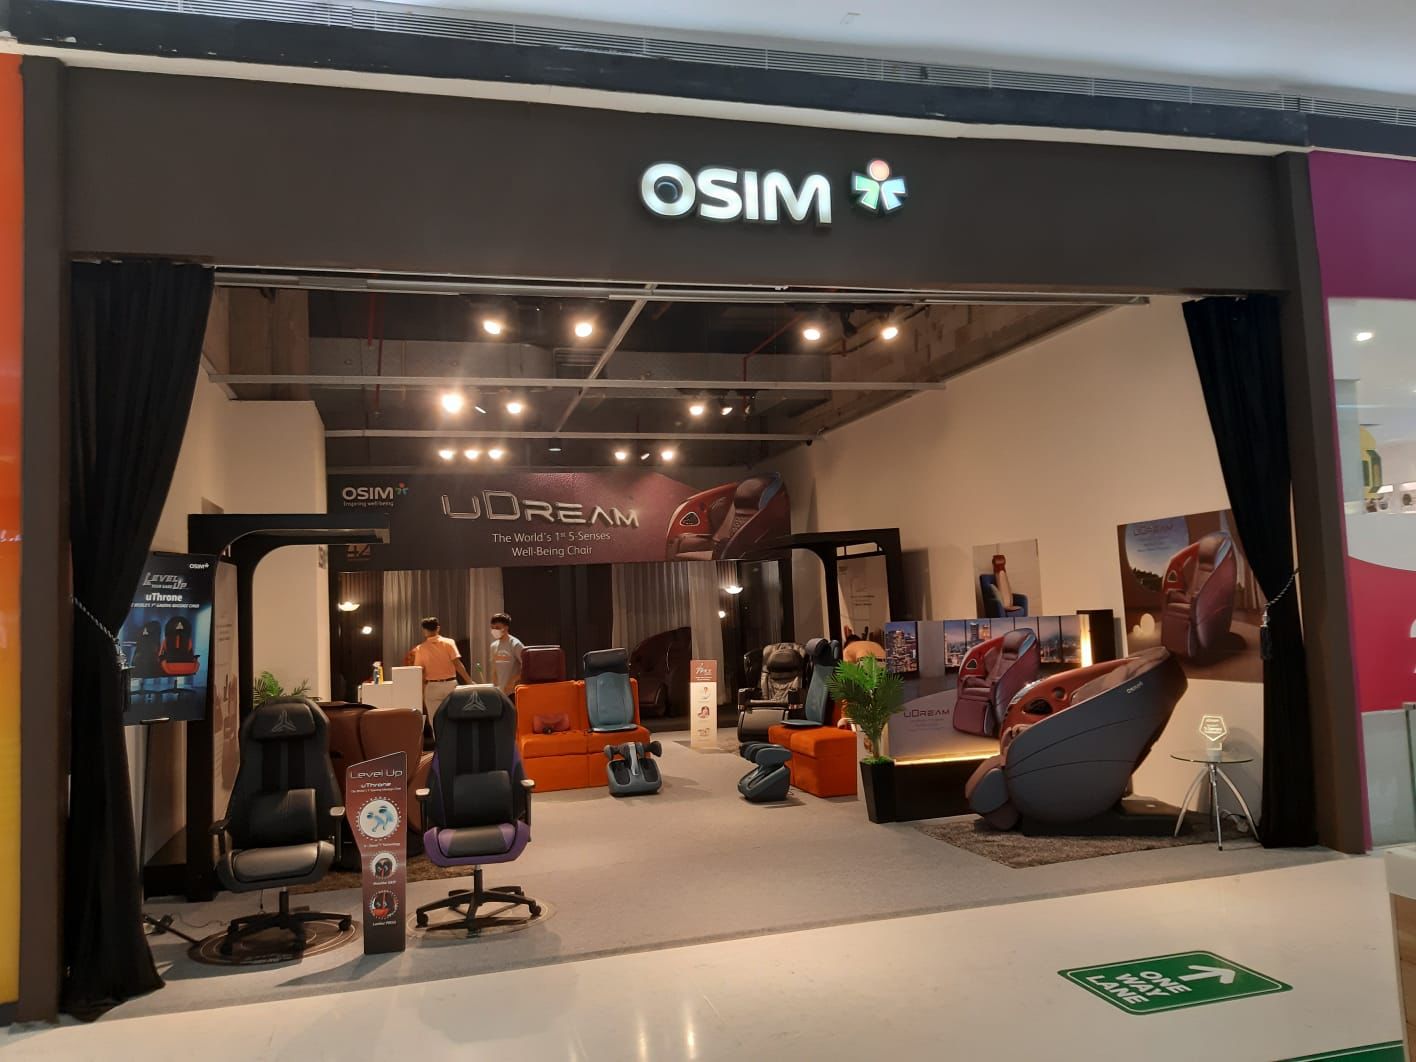 OSIM shop front in lippo mall puri st. moritz